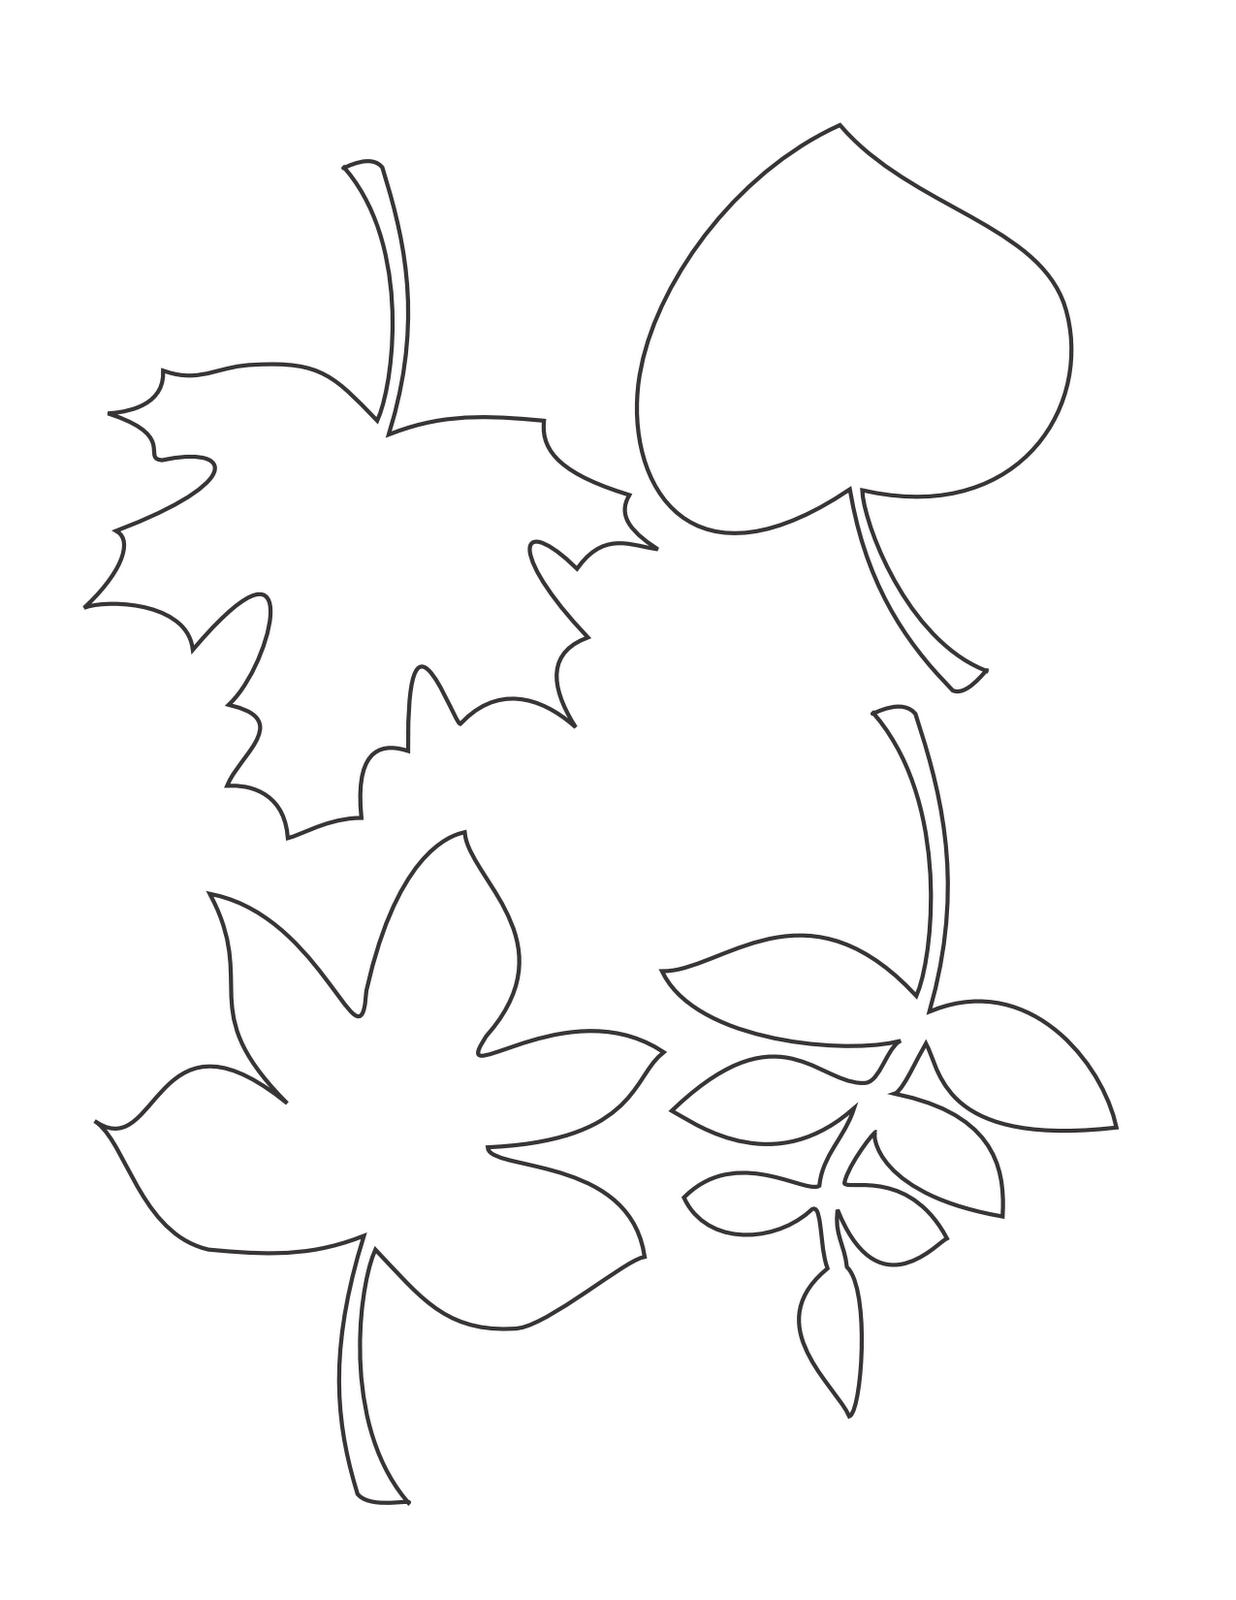 Tricia-Rennea, illustrator: Leaf Patterns